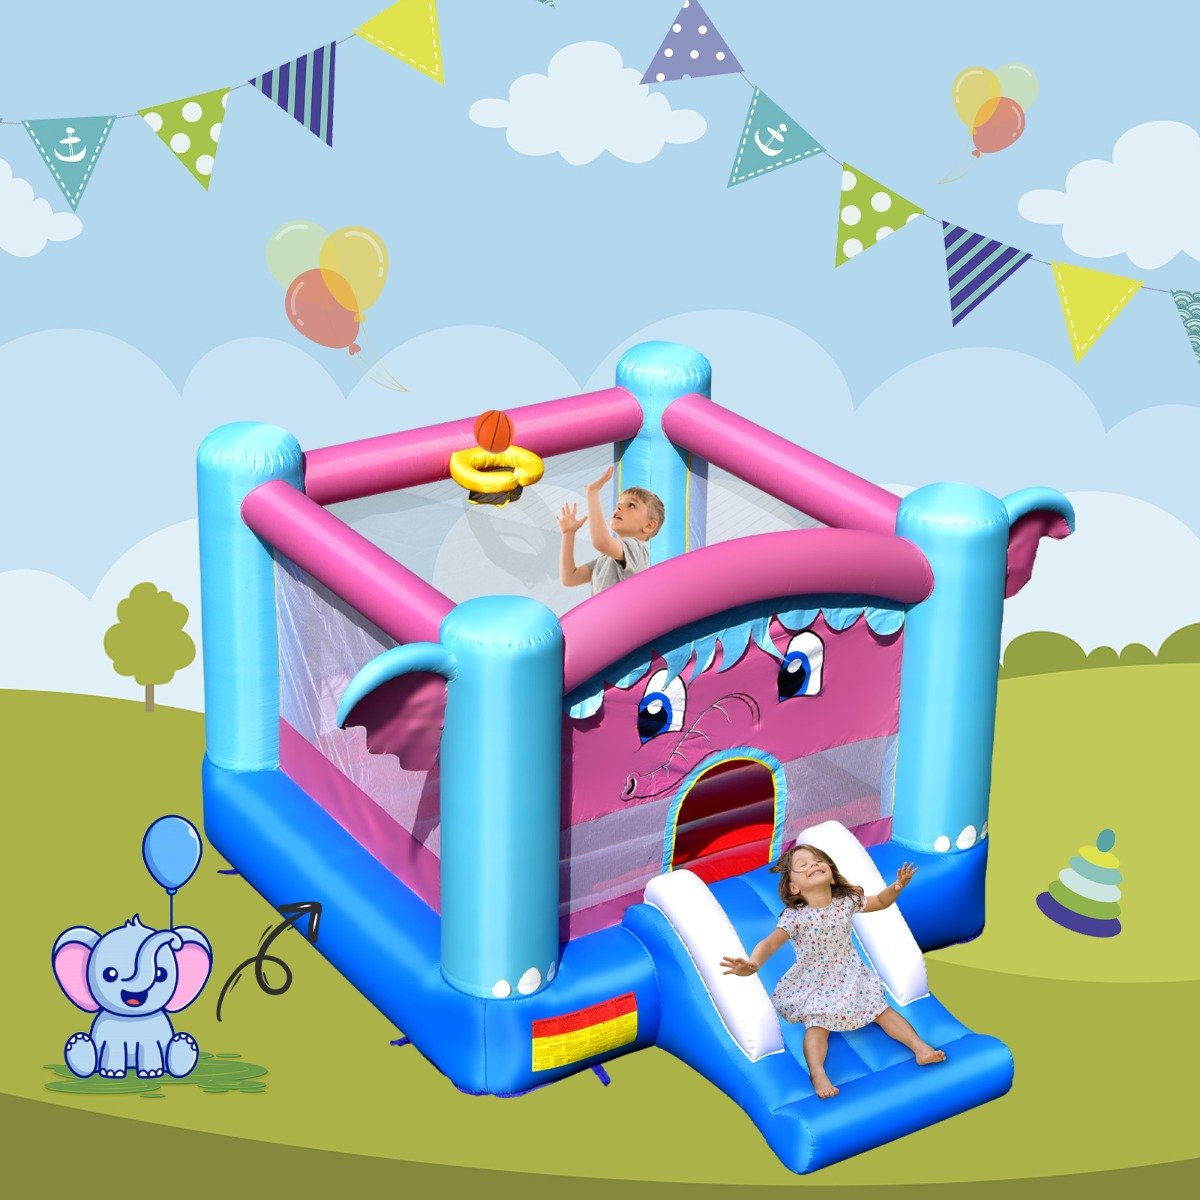 Experience Joy: Elephant Theme Inflatable Jumping Castle